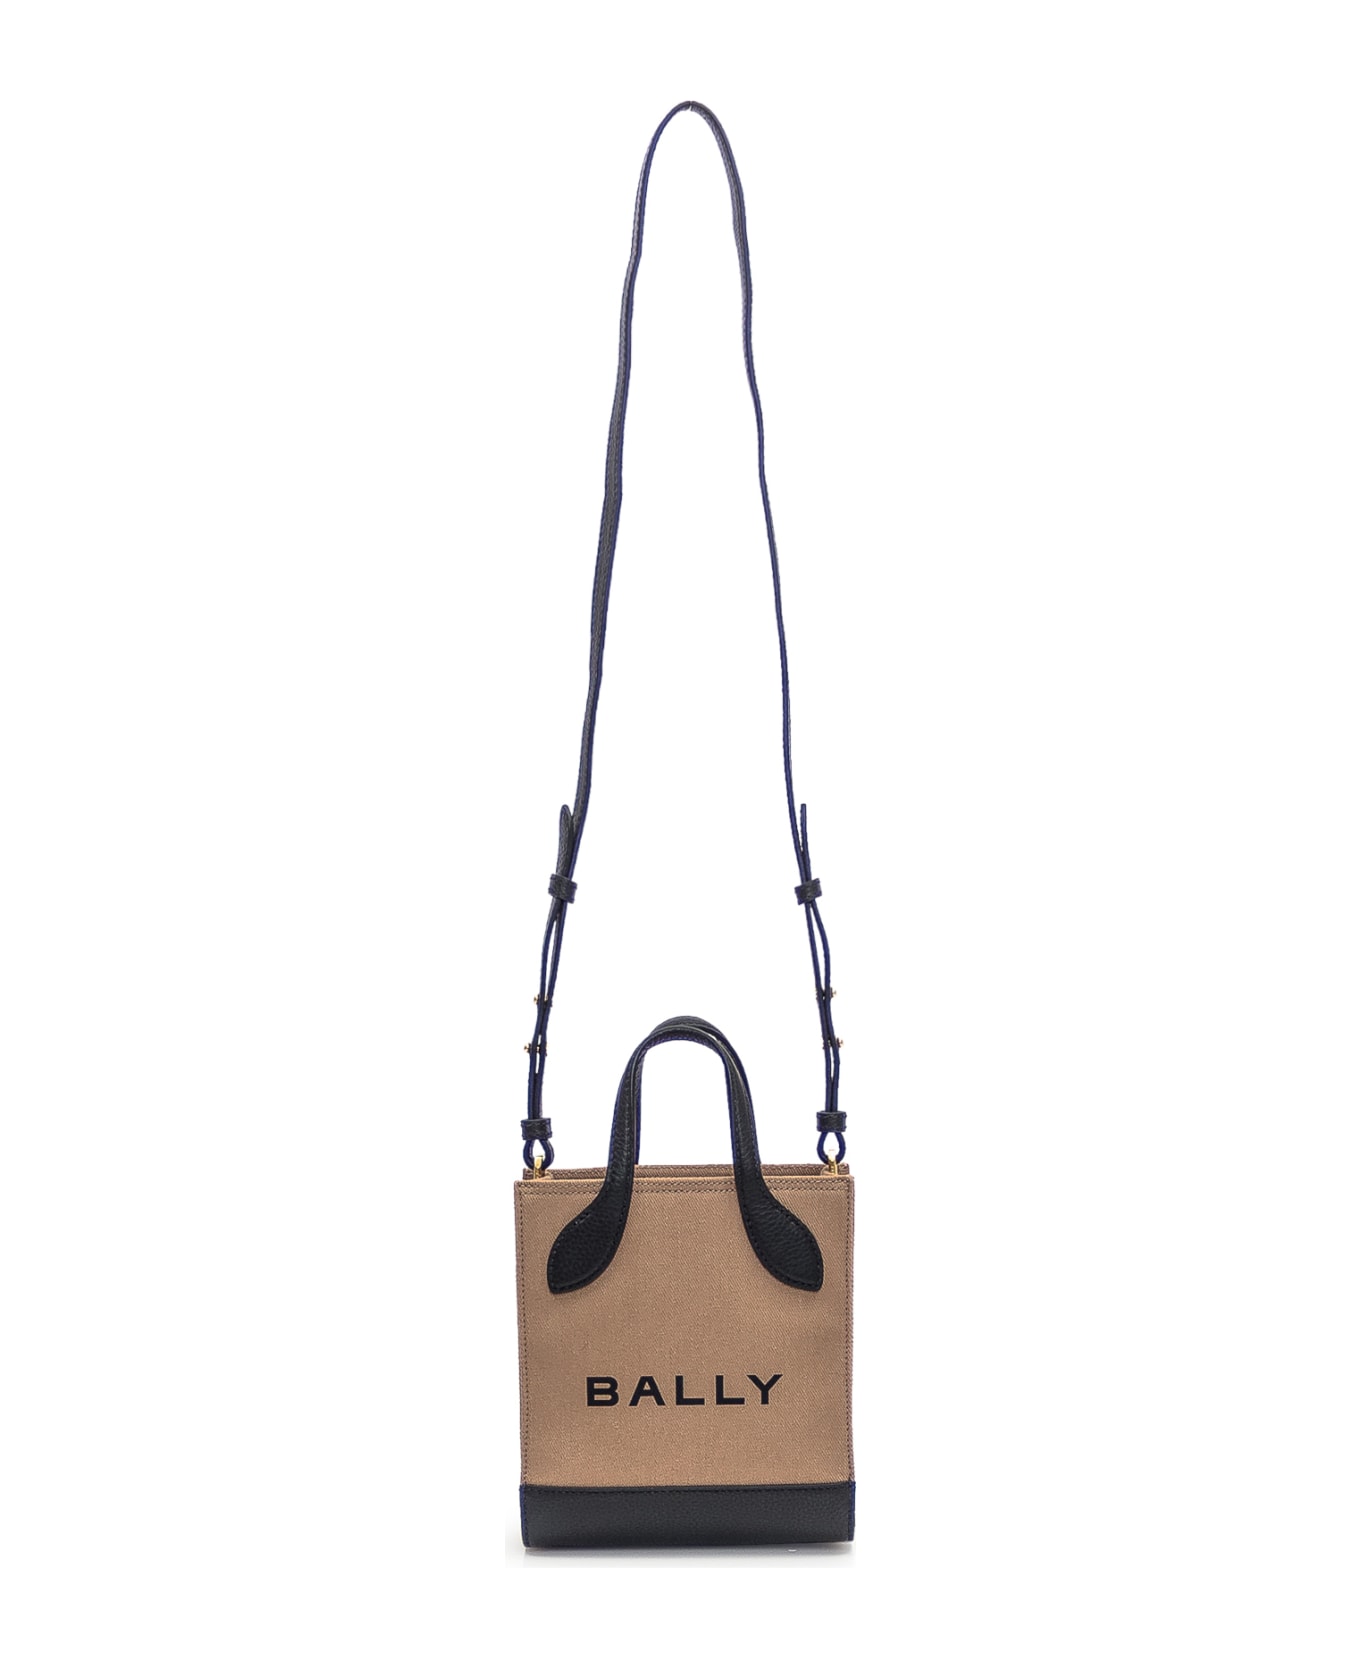 Bally Bag With Logo - SAND/BLACK+ORO